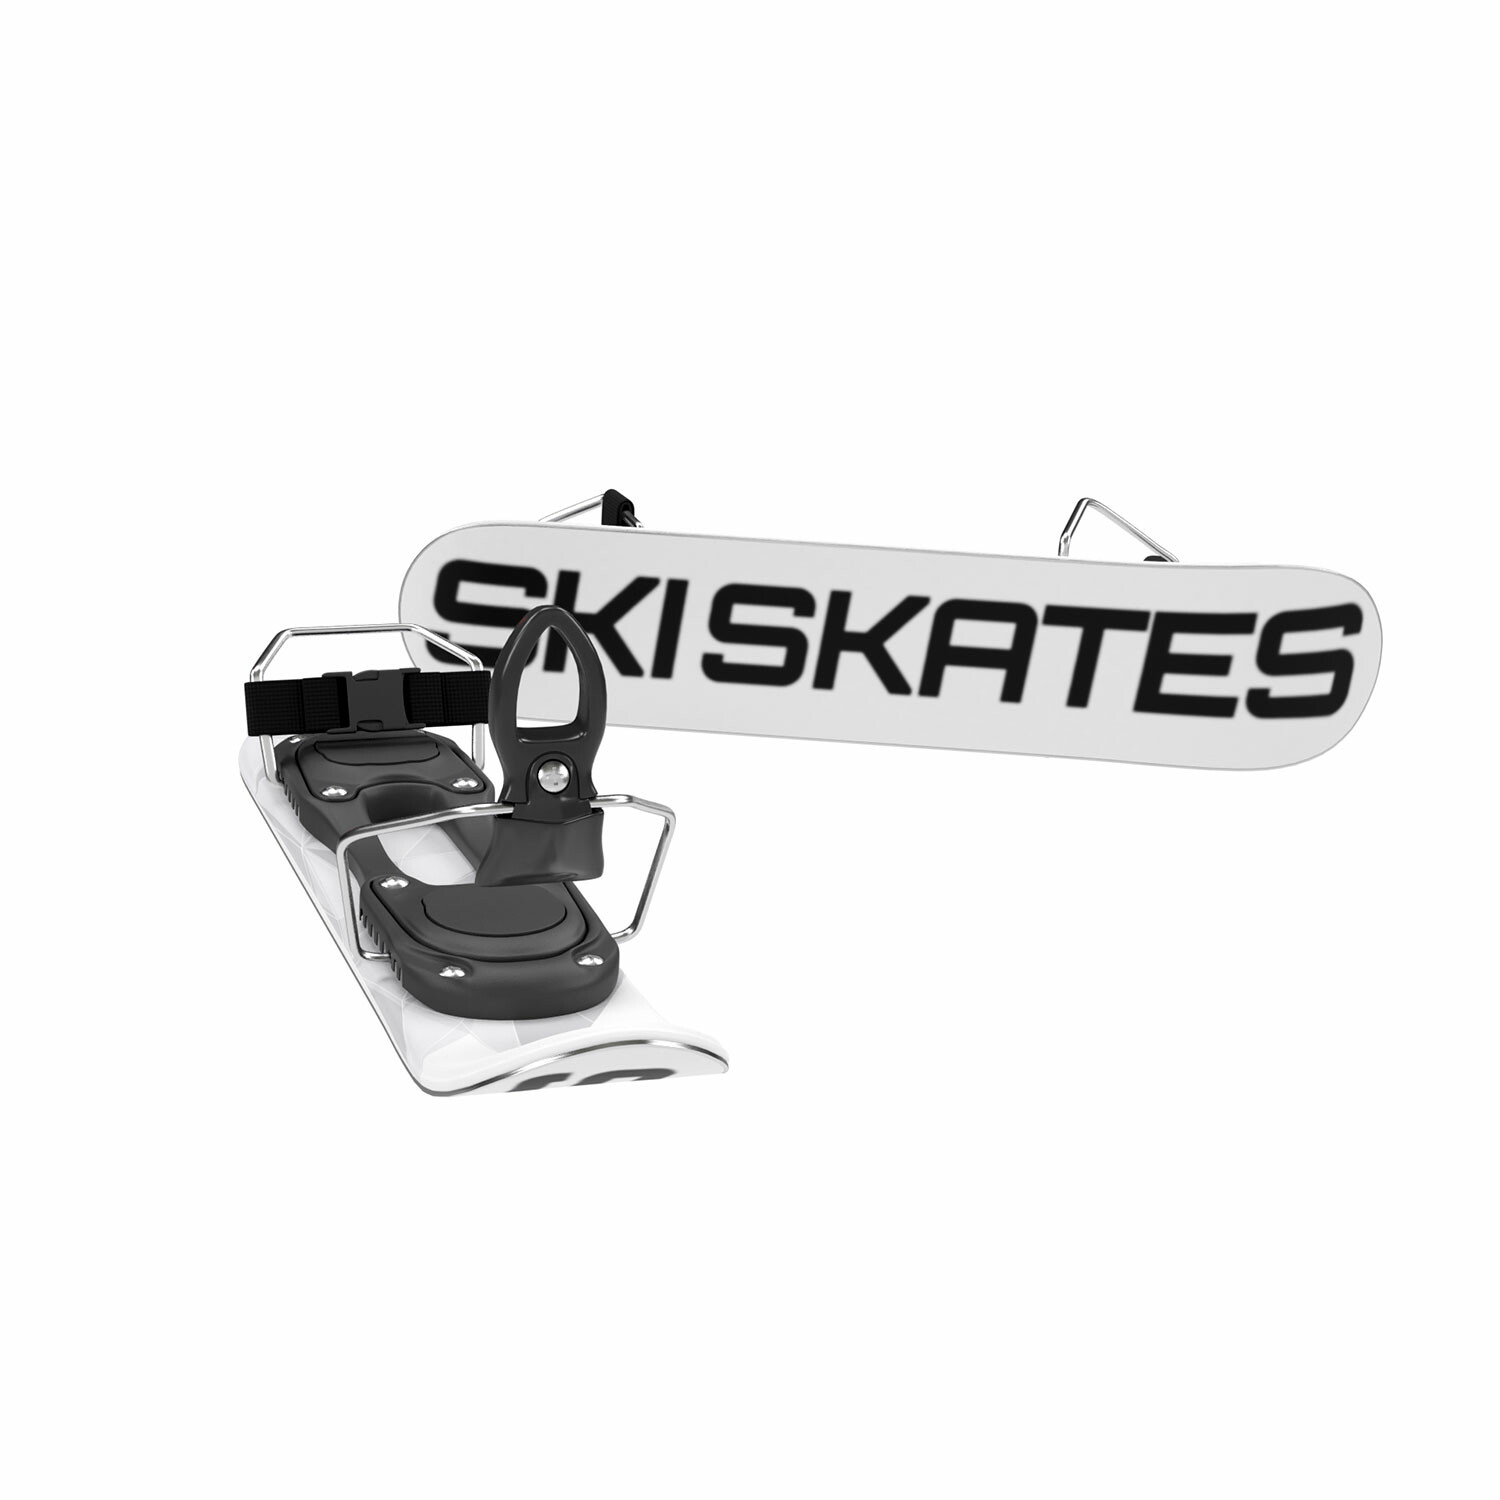 Skiskates // Ski Boots (Black) - SnowFeet PERMANENT STORE - Touch